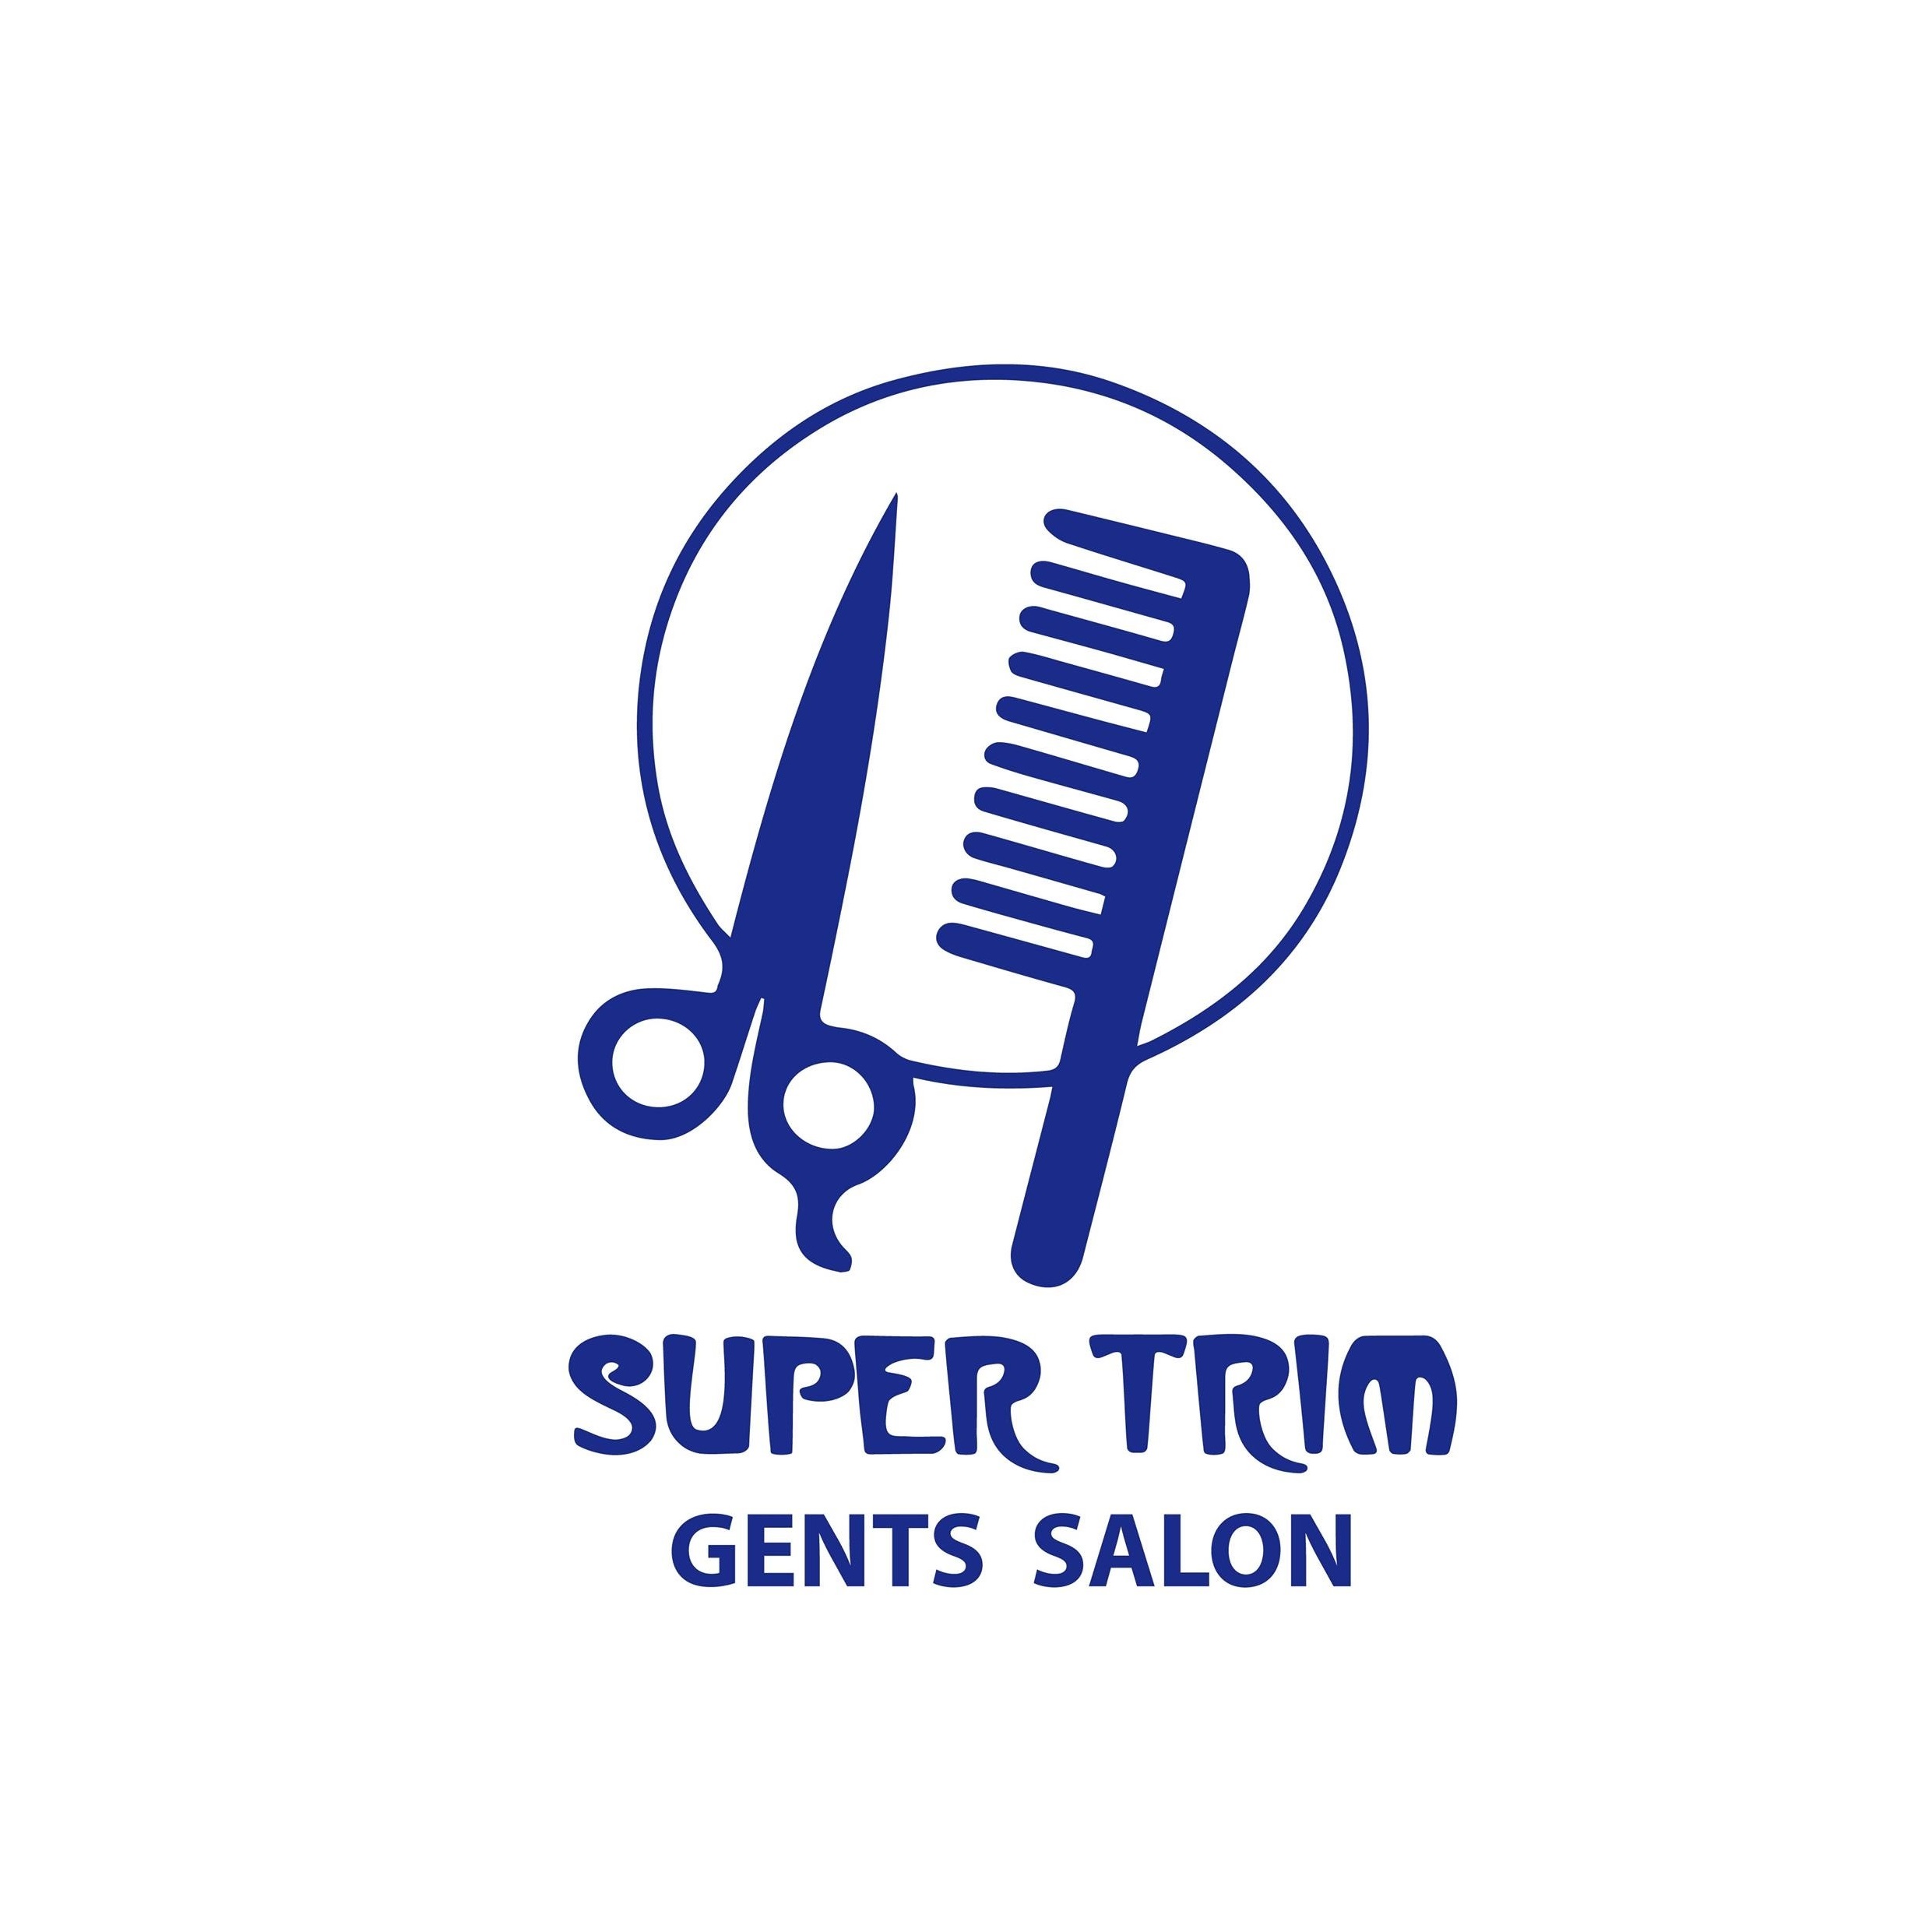 Super Trim - Jable Ali Village (Men's Salon ) in Dubai | Get Contact ...